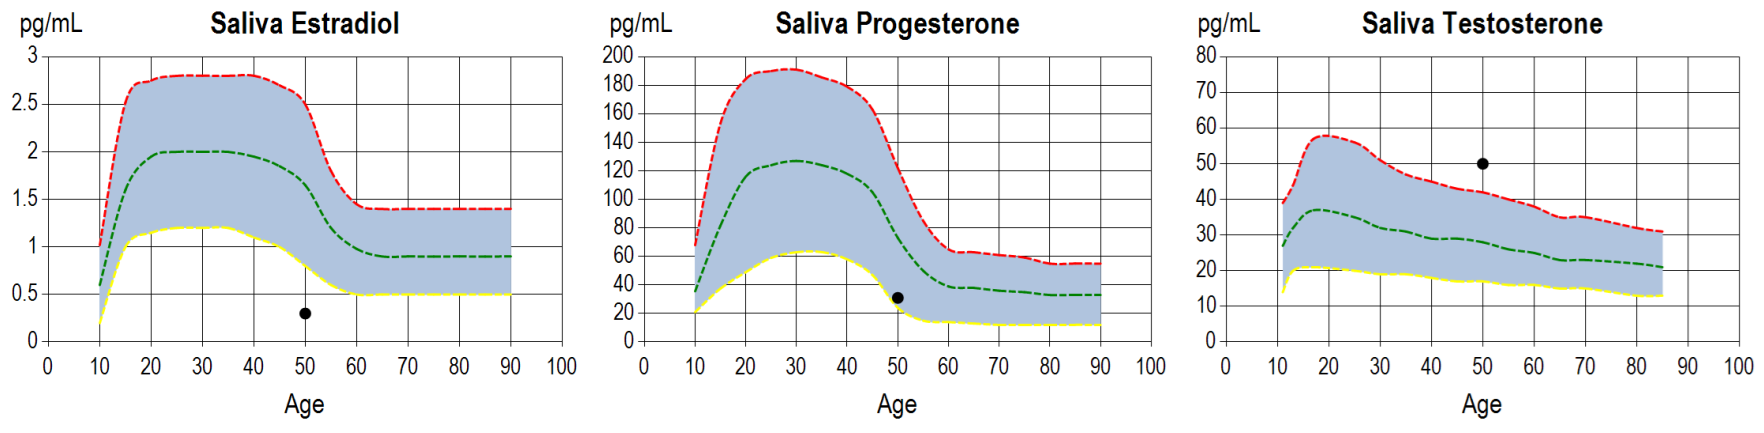 Saliva Estradiol, Saliva Progesterone, and Saliva Testosterone test results presented by ZRT Laboratory